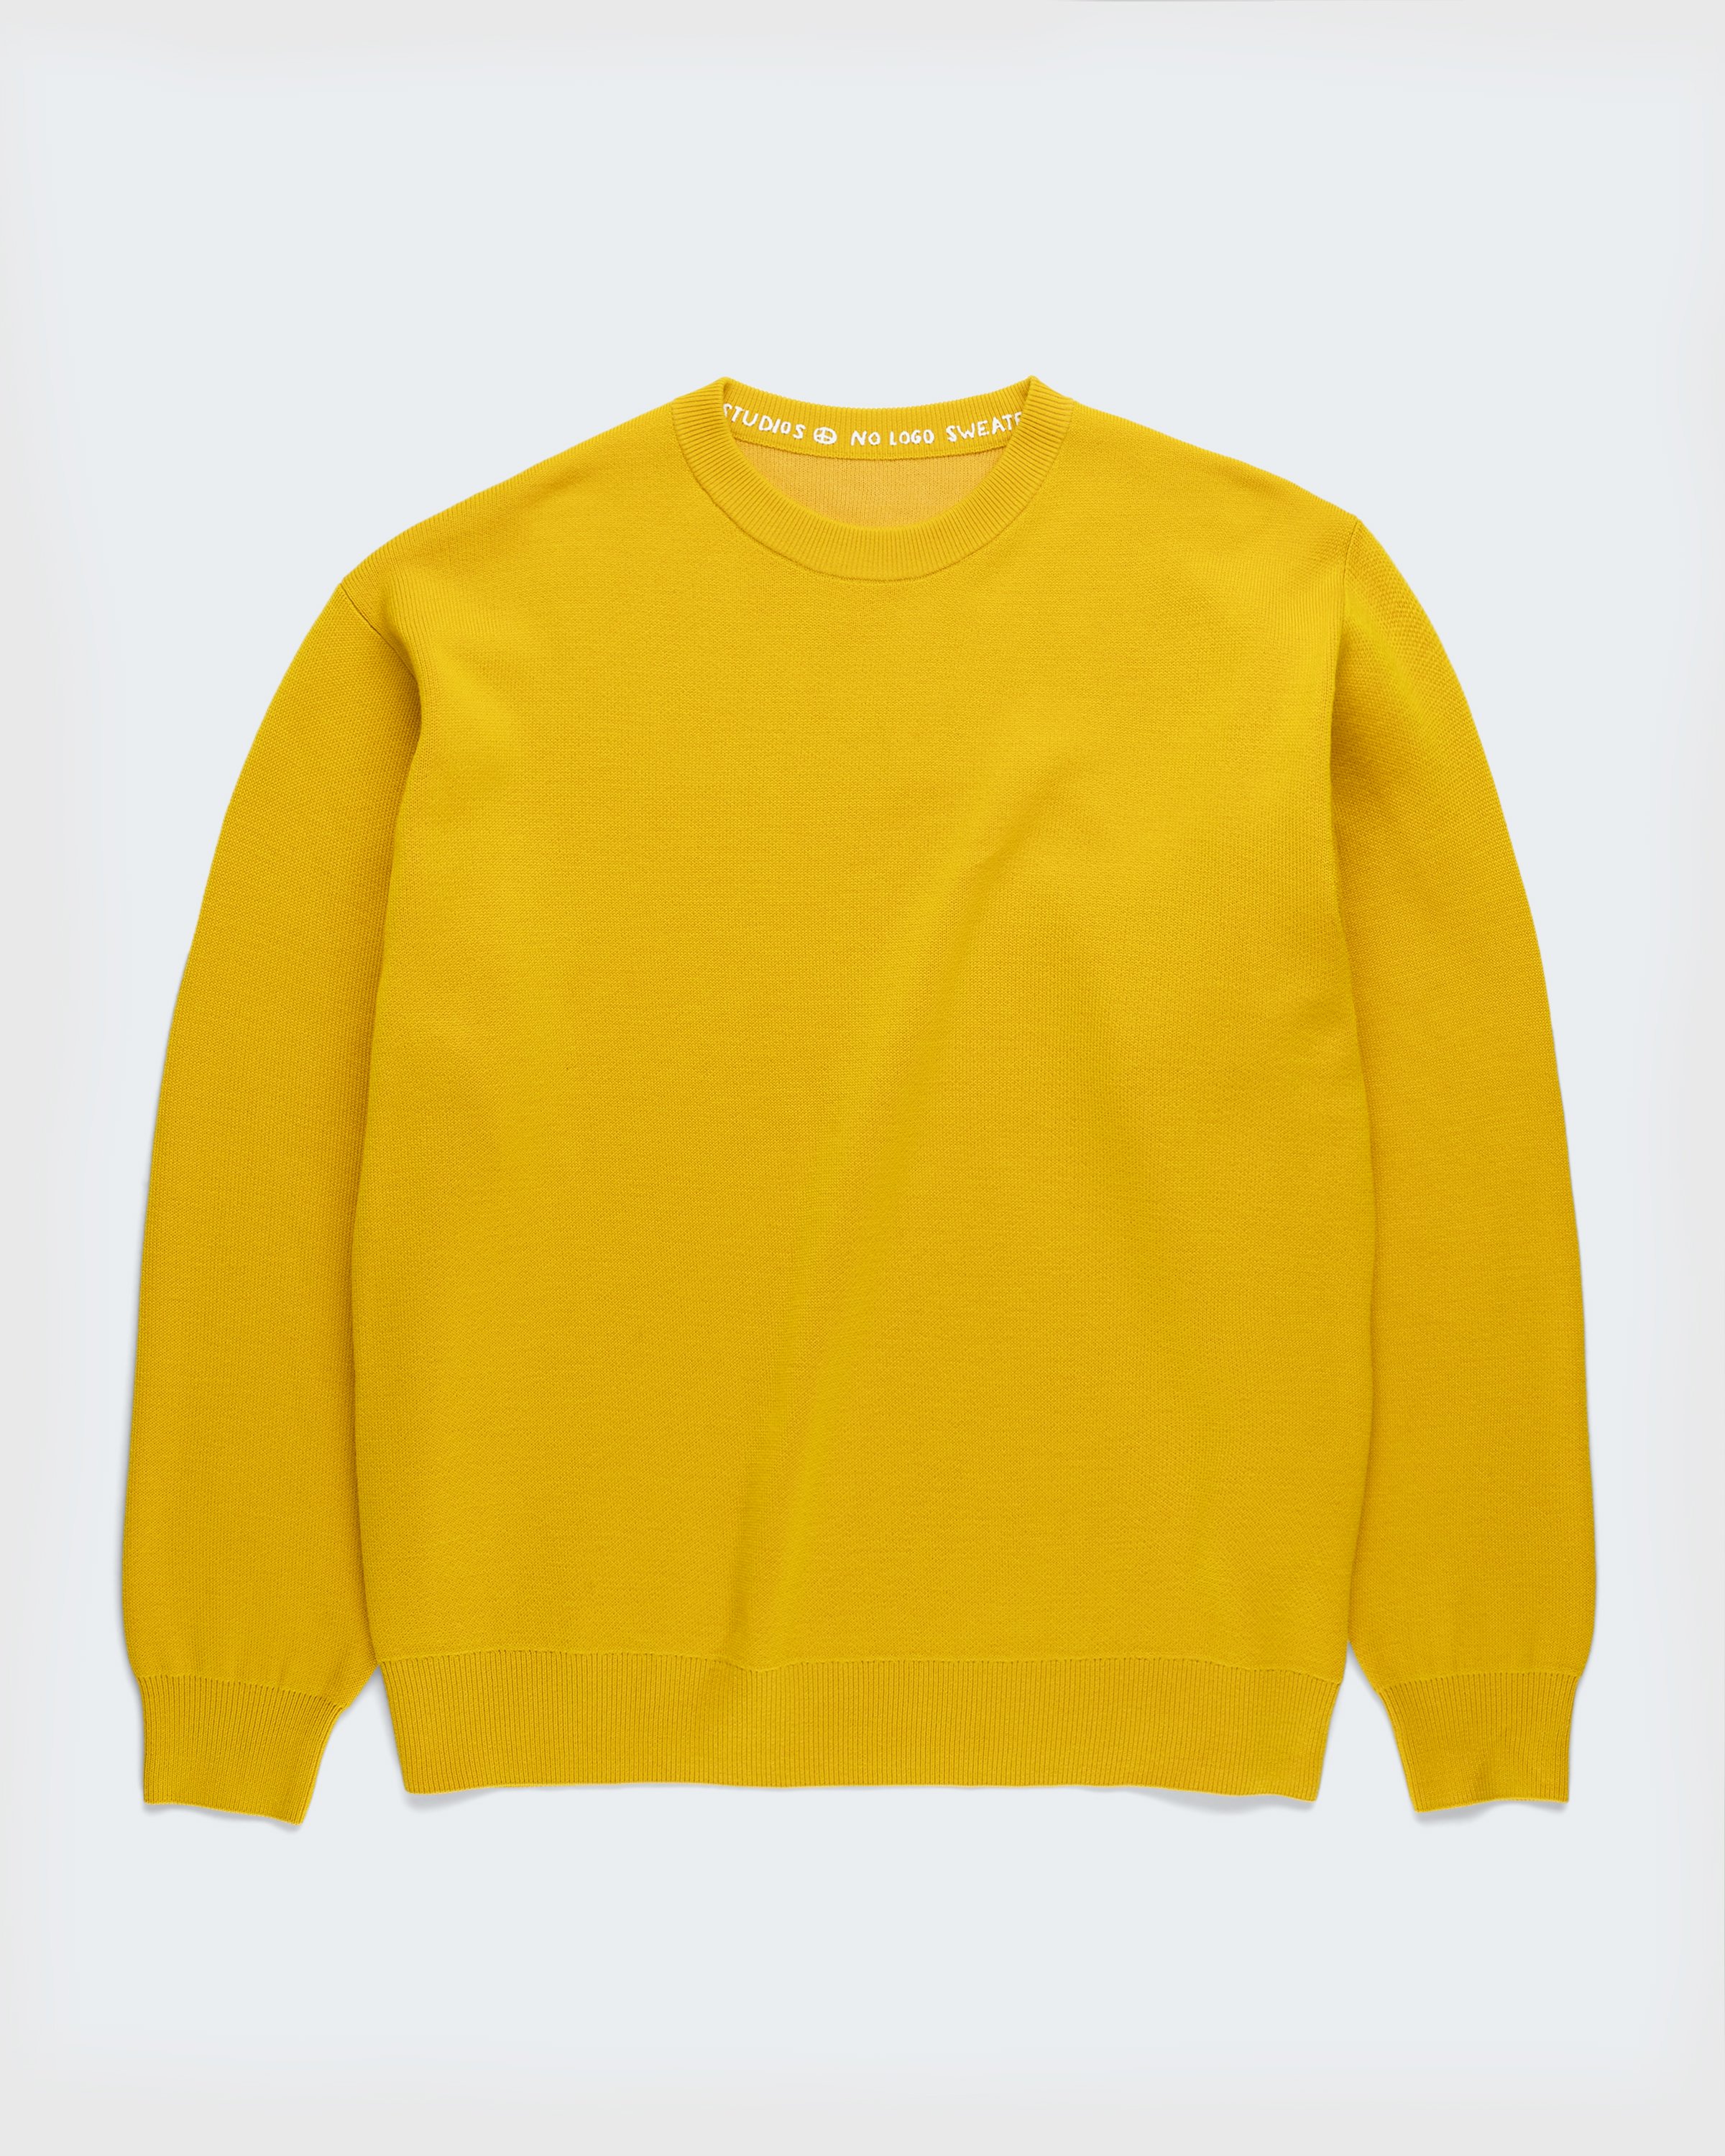 Acne Studios – Merino Wool Crewneck Sweater Yellow | Highsnobiety Shop